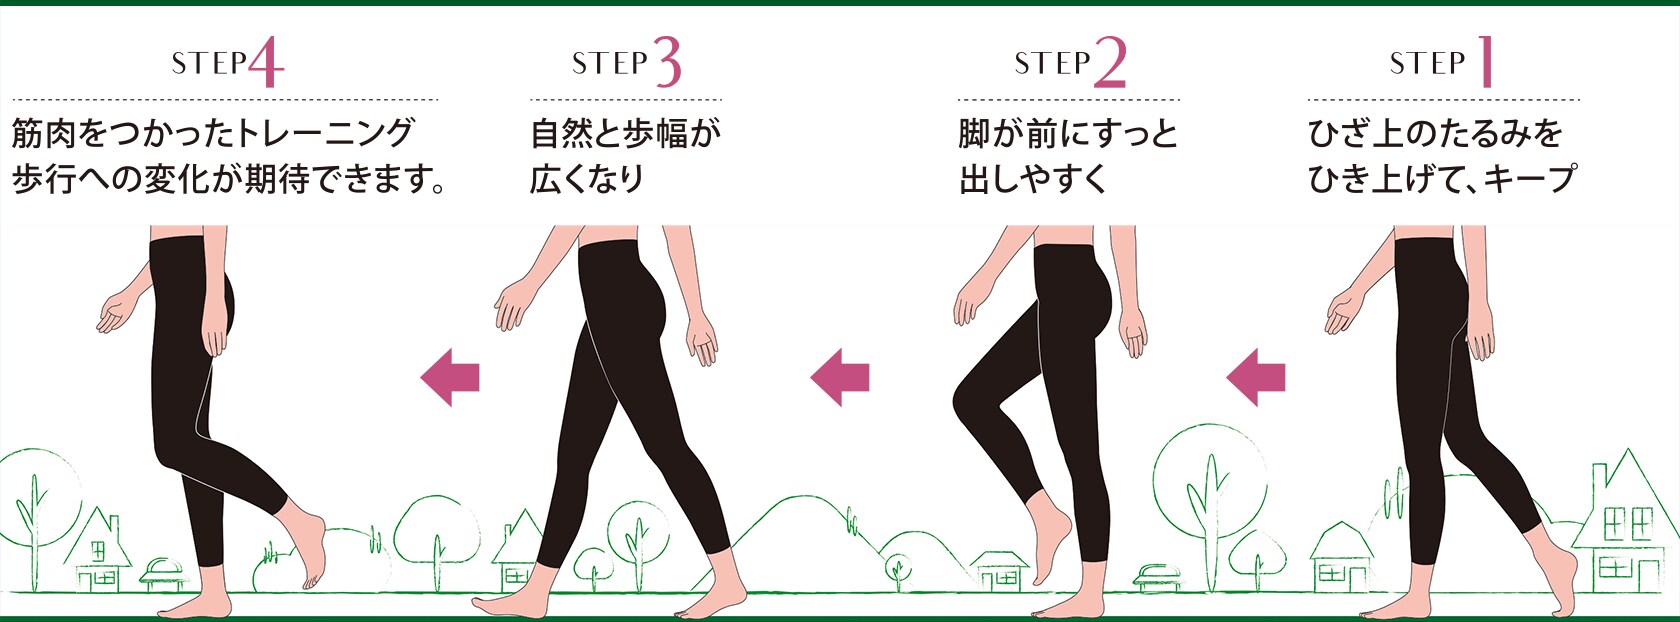 STEP1：ひざ上のたるみをひき上げて、キープ　STEP2：脚が前にすっと出しやすく　STEP3：自然と歩幅が広くなり　STEP4：筋肉をつかったトレーニング 歩行への変化が期待できます。